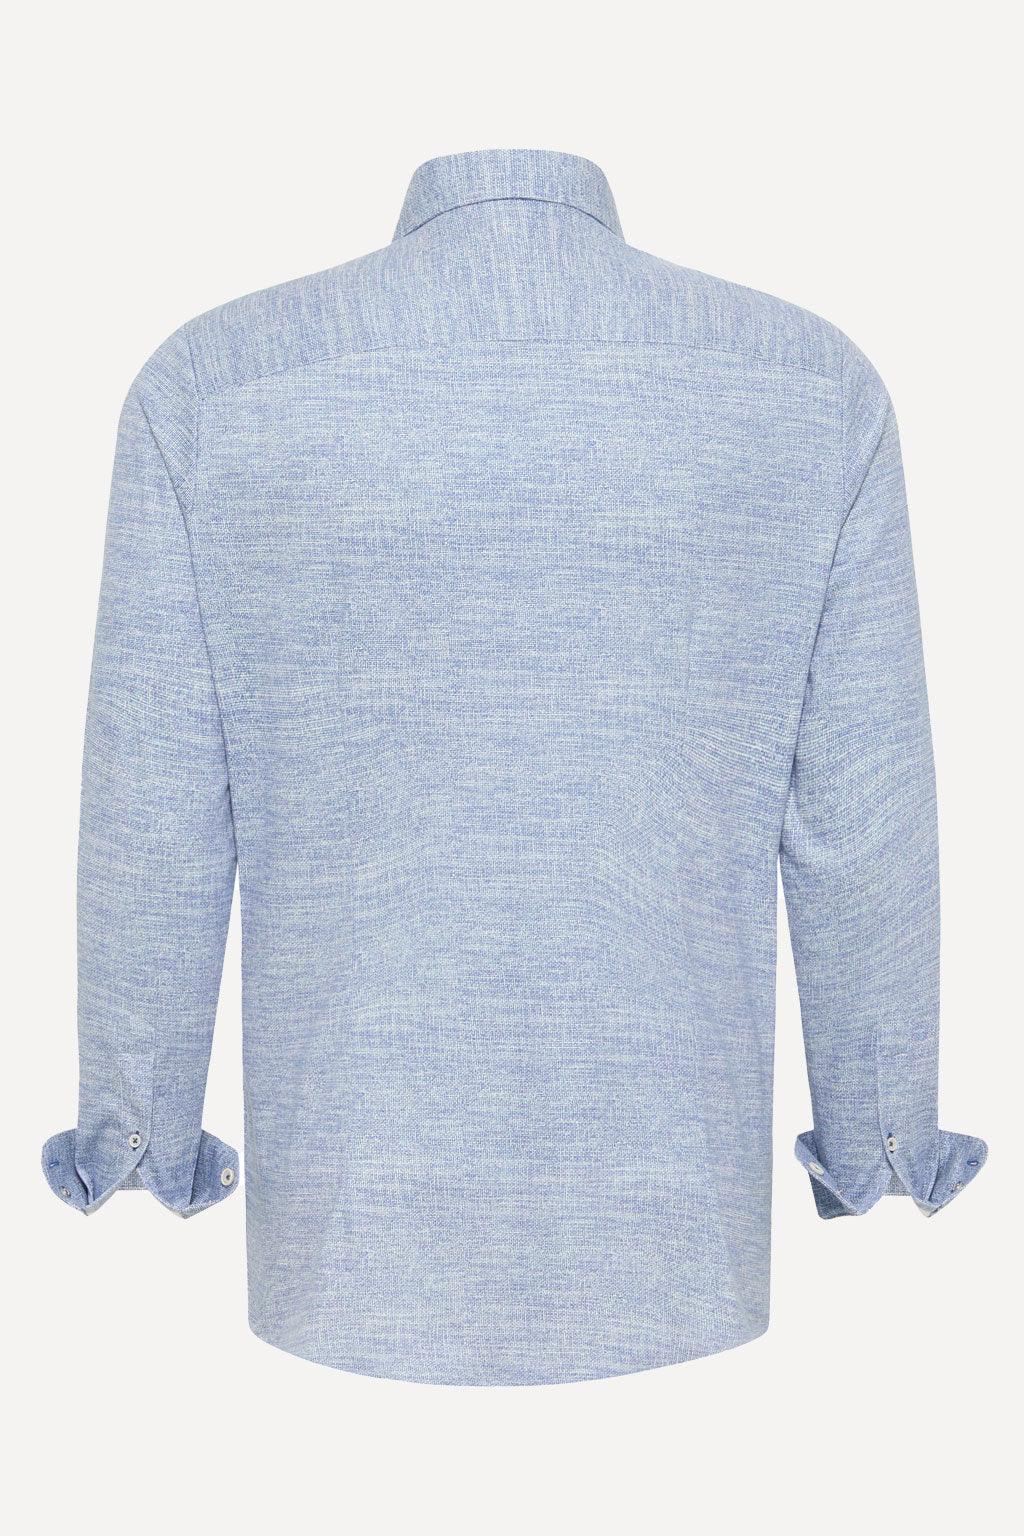 Blue Industry overhemd lange mouw | Big Boss | the menswear concept